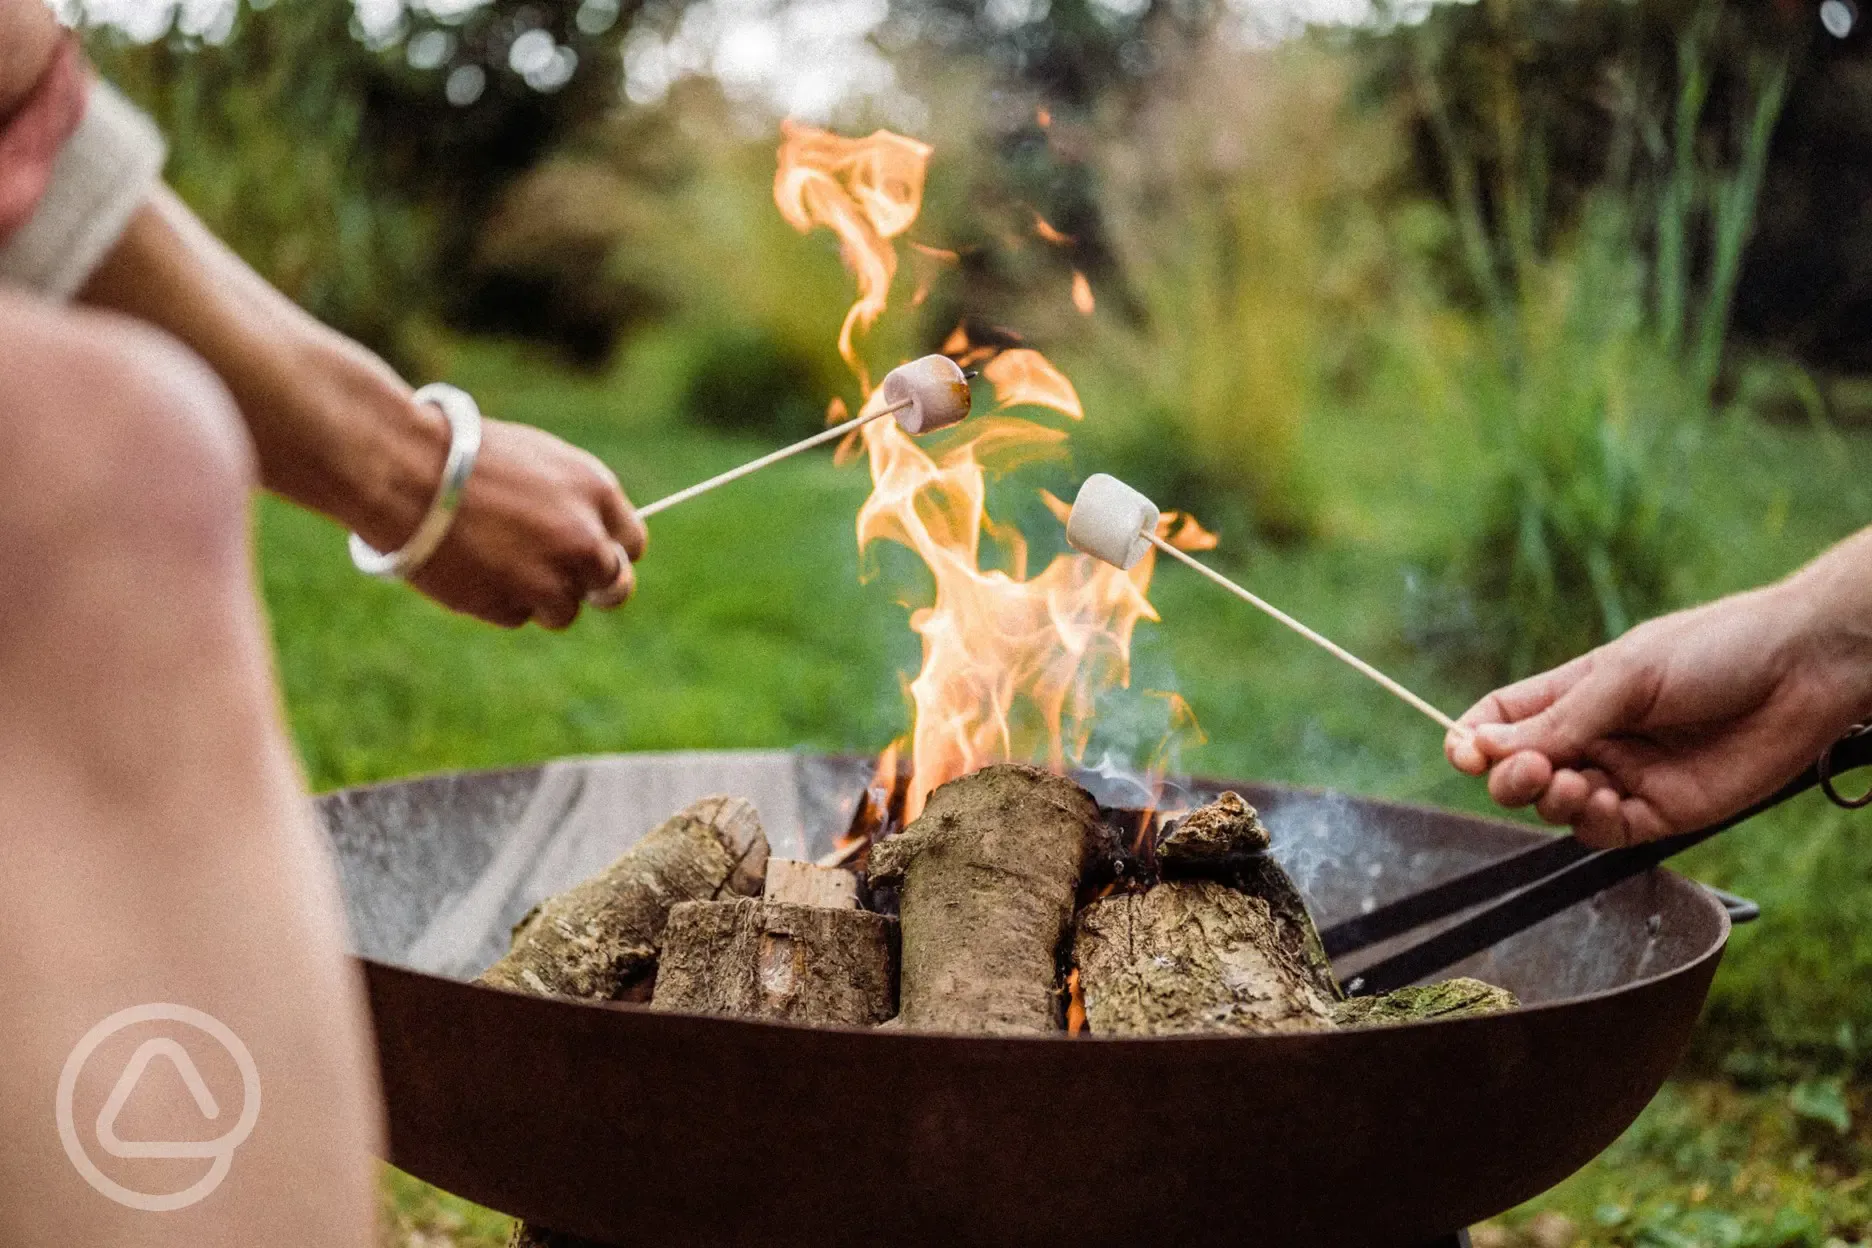 Toasting marshmallows on your firebowl